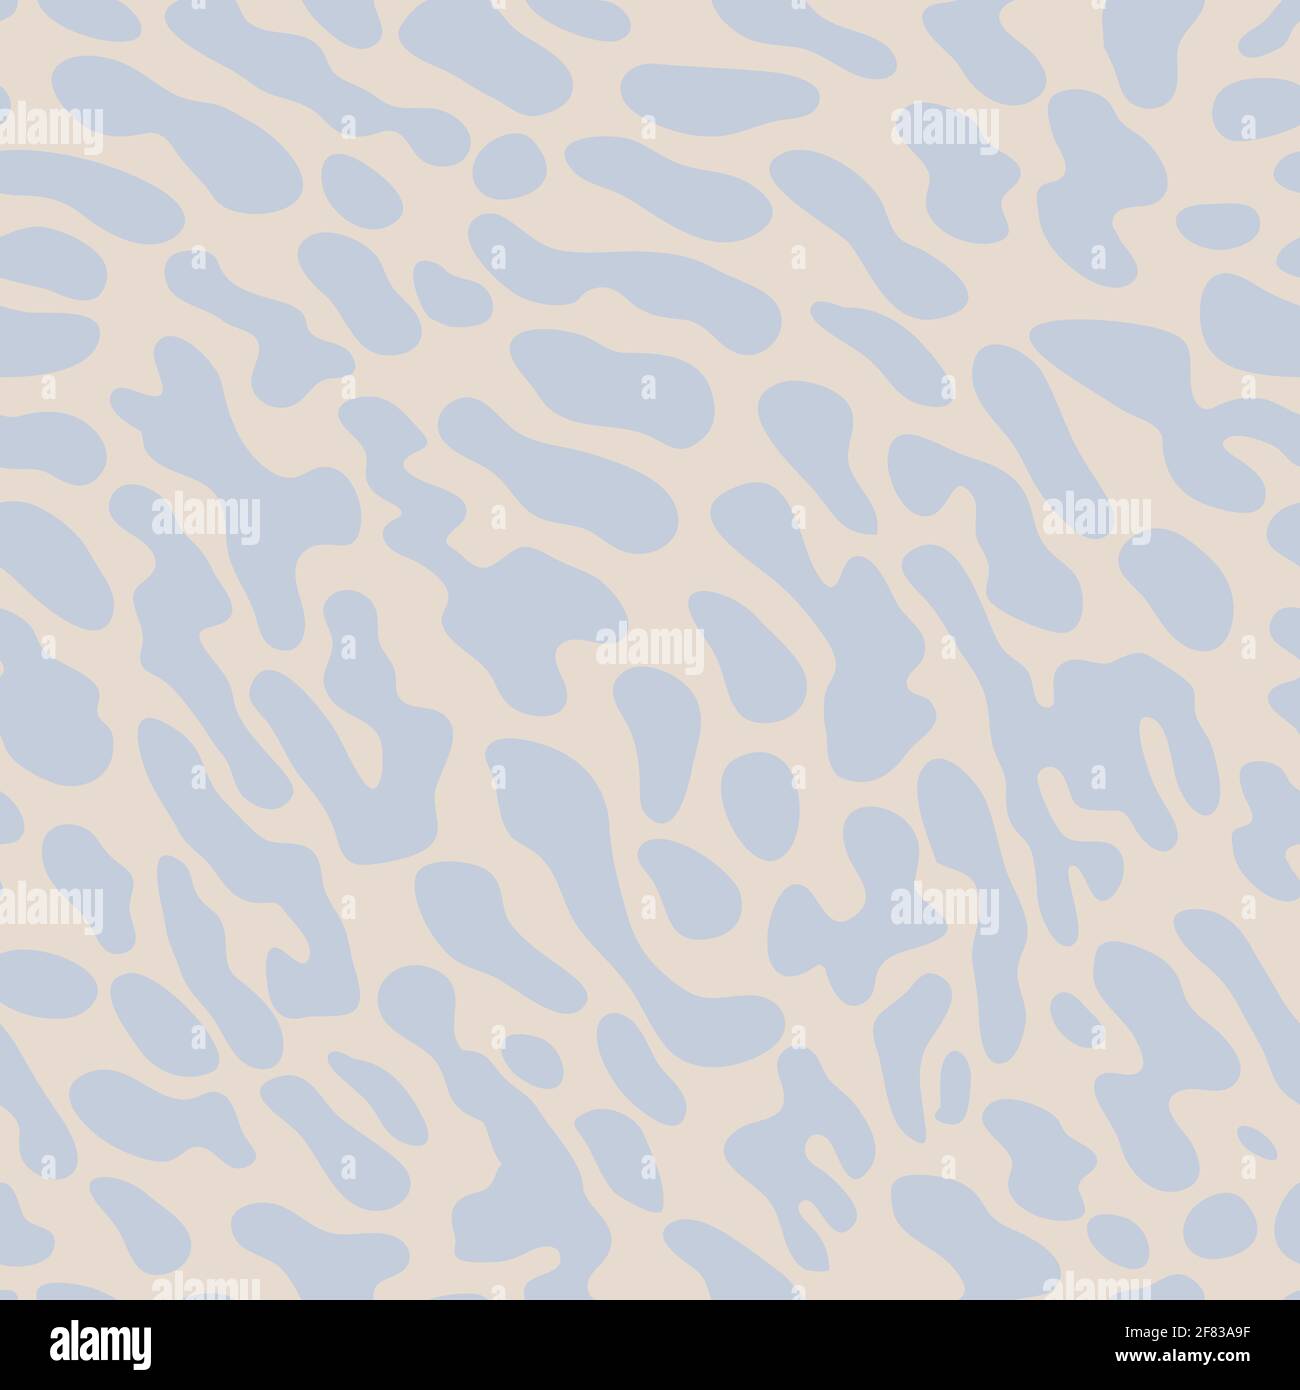 Pheasant bird plumage seamless pattern vector illustration. Animal beige and blue minimalistic print. Stock Vector